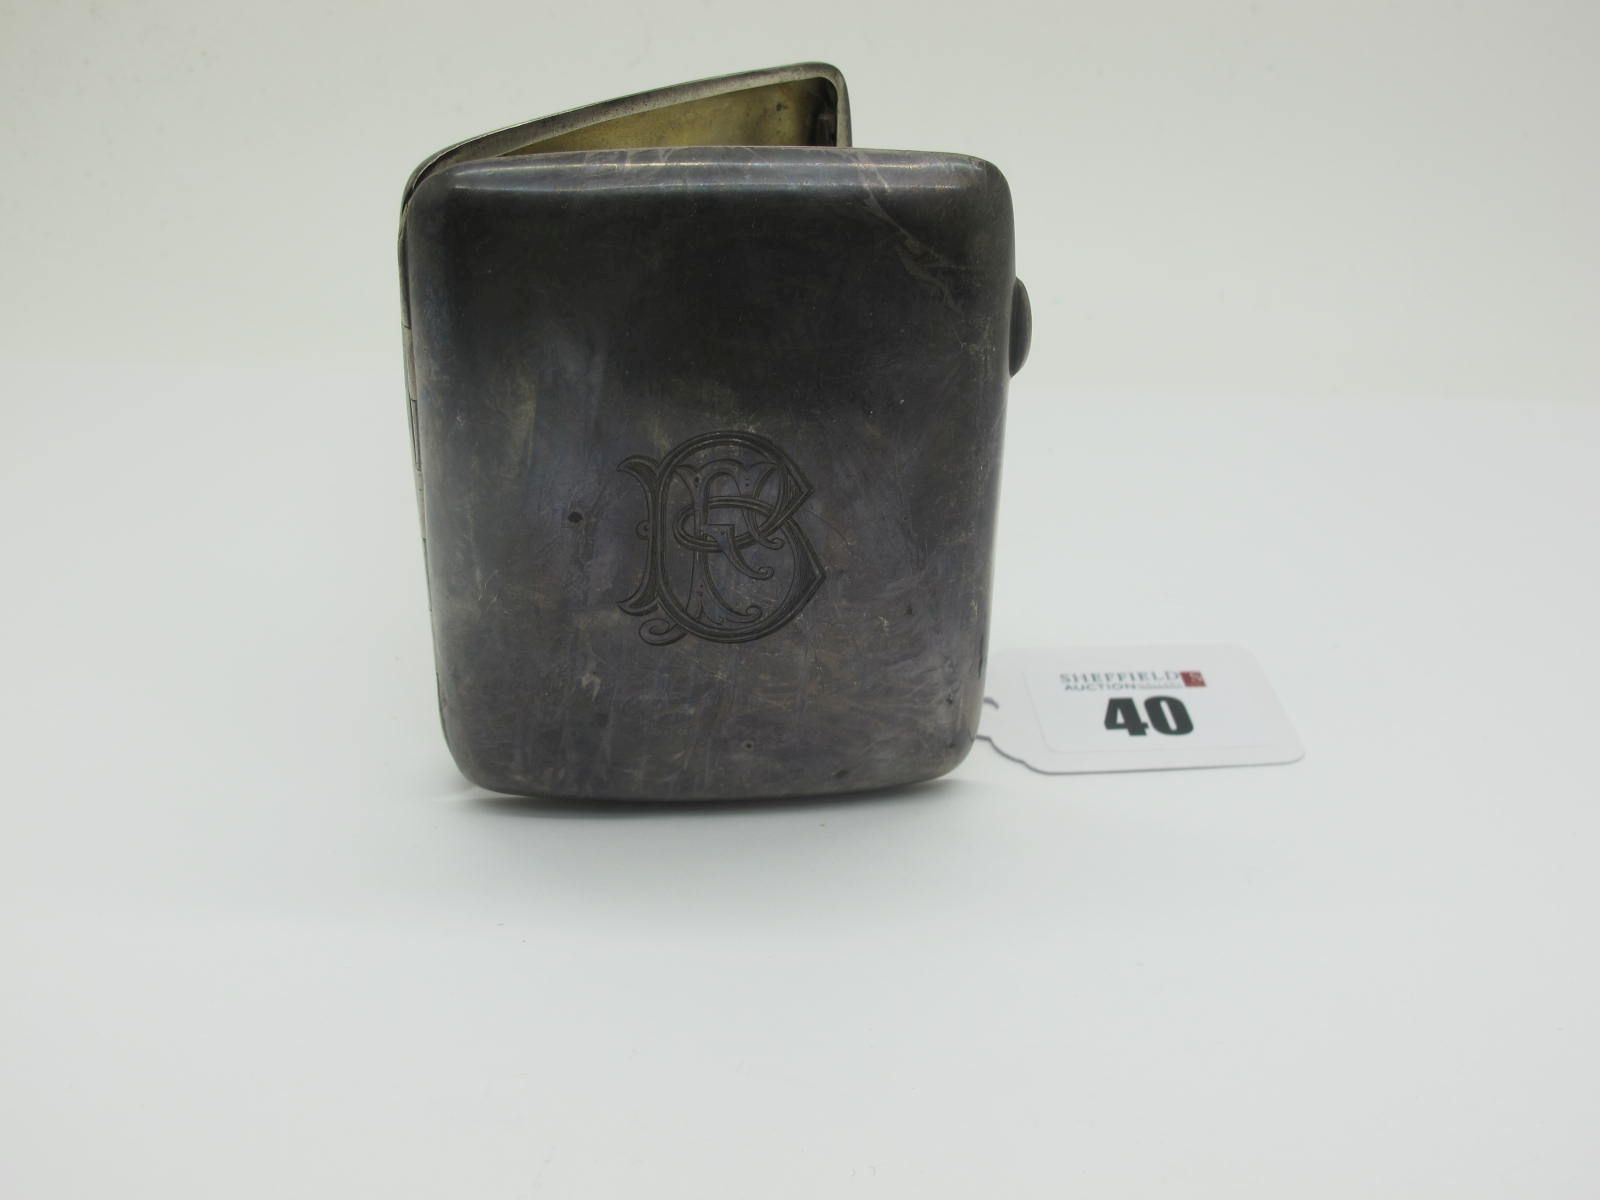 A Hallmarked Silver Cigarette Case, monogrammed (dents).